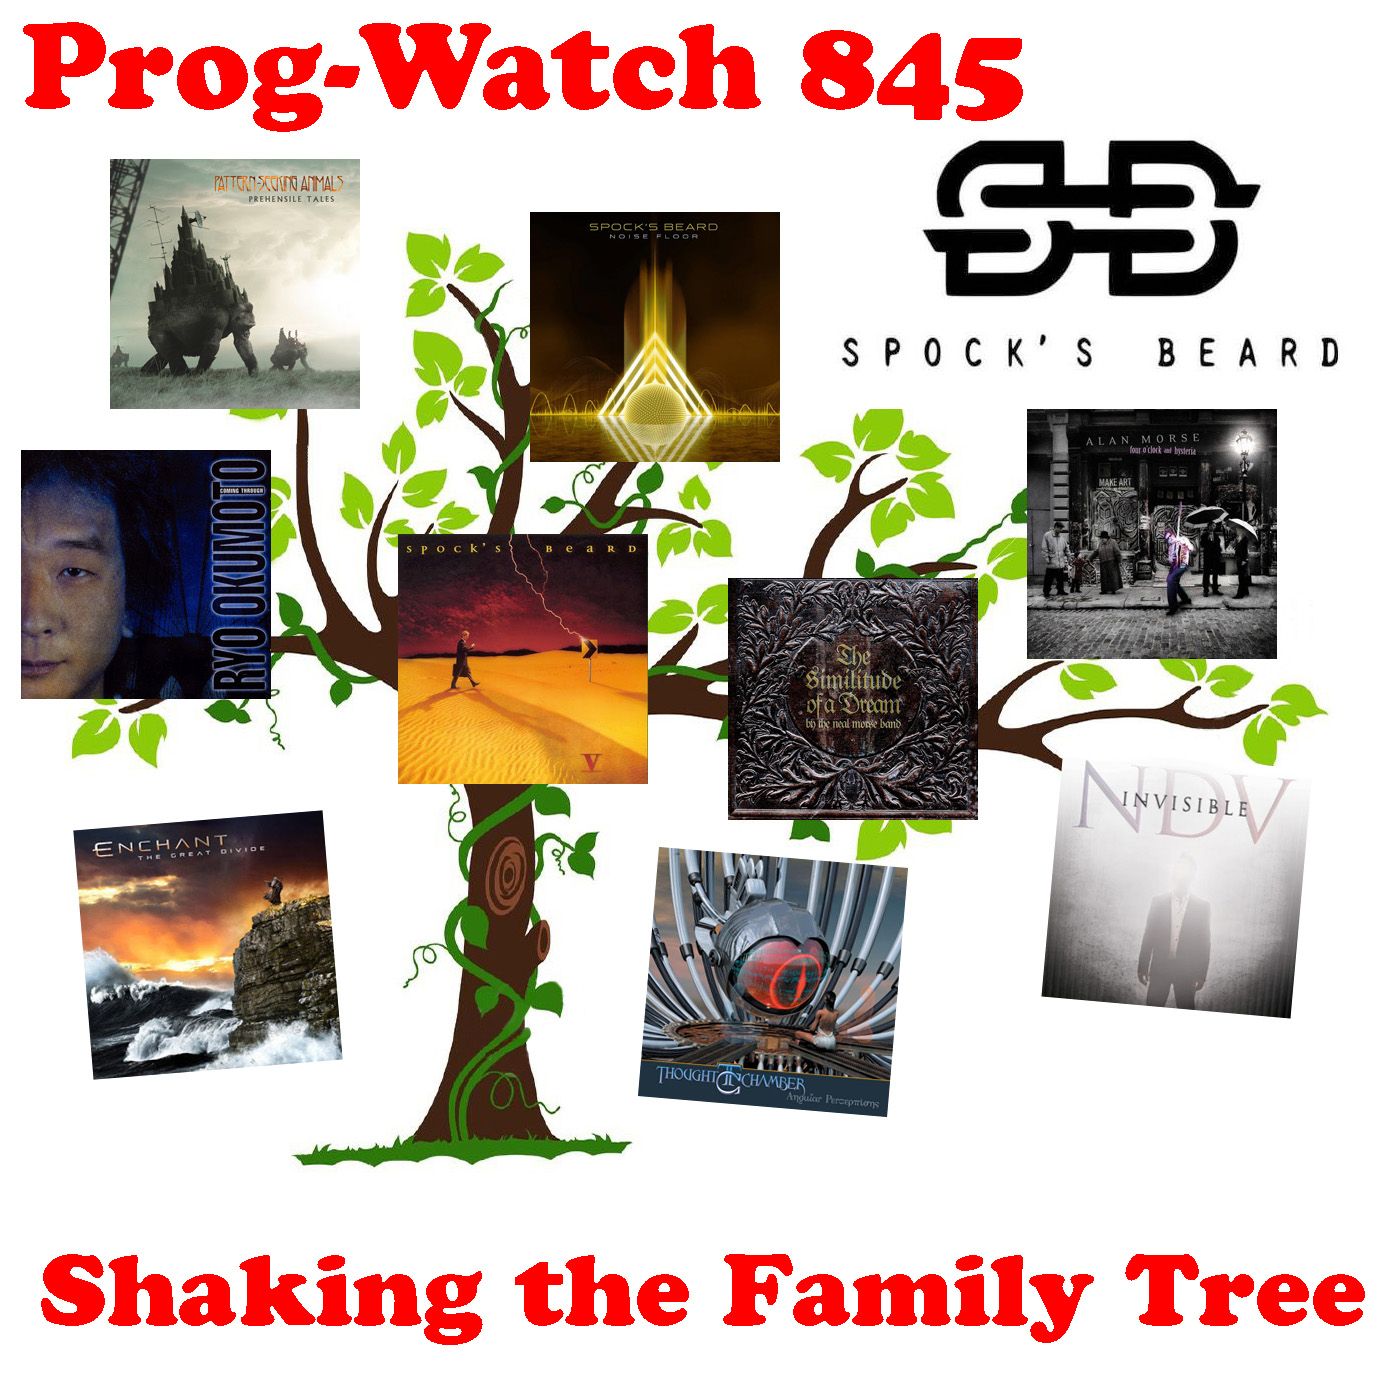 Episode 845 - Shaking the Family Tree of Spock's Beard